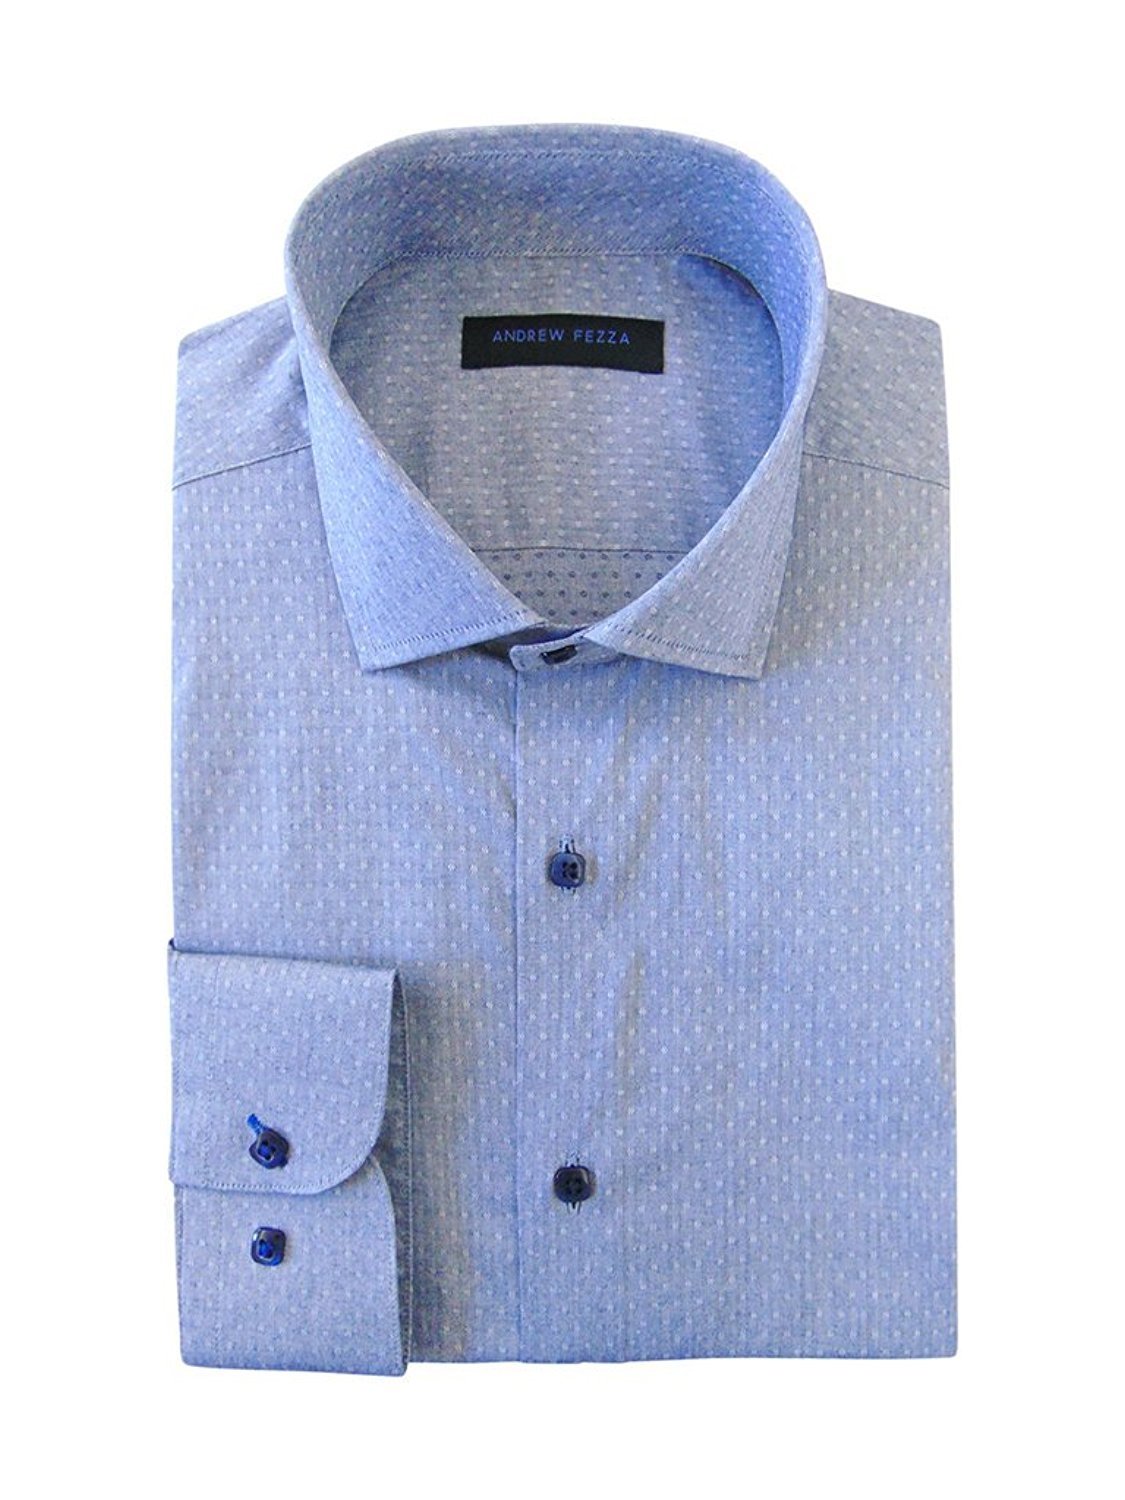 Andrew Fezza Men's Slim Fit Long Sleeve Solid Cotton Dress Shirt Colors 